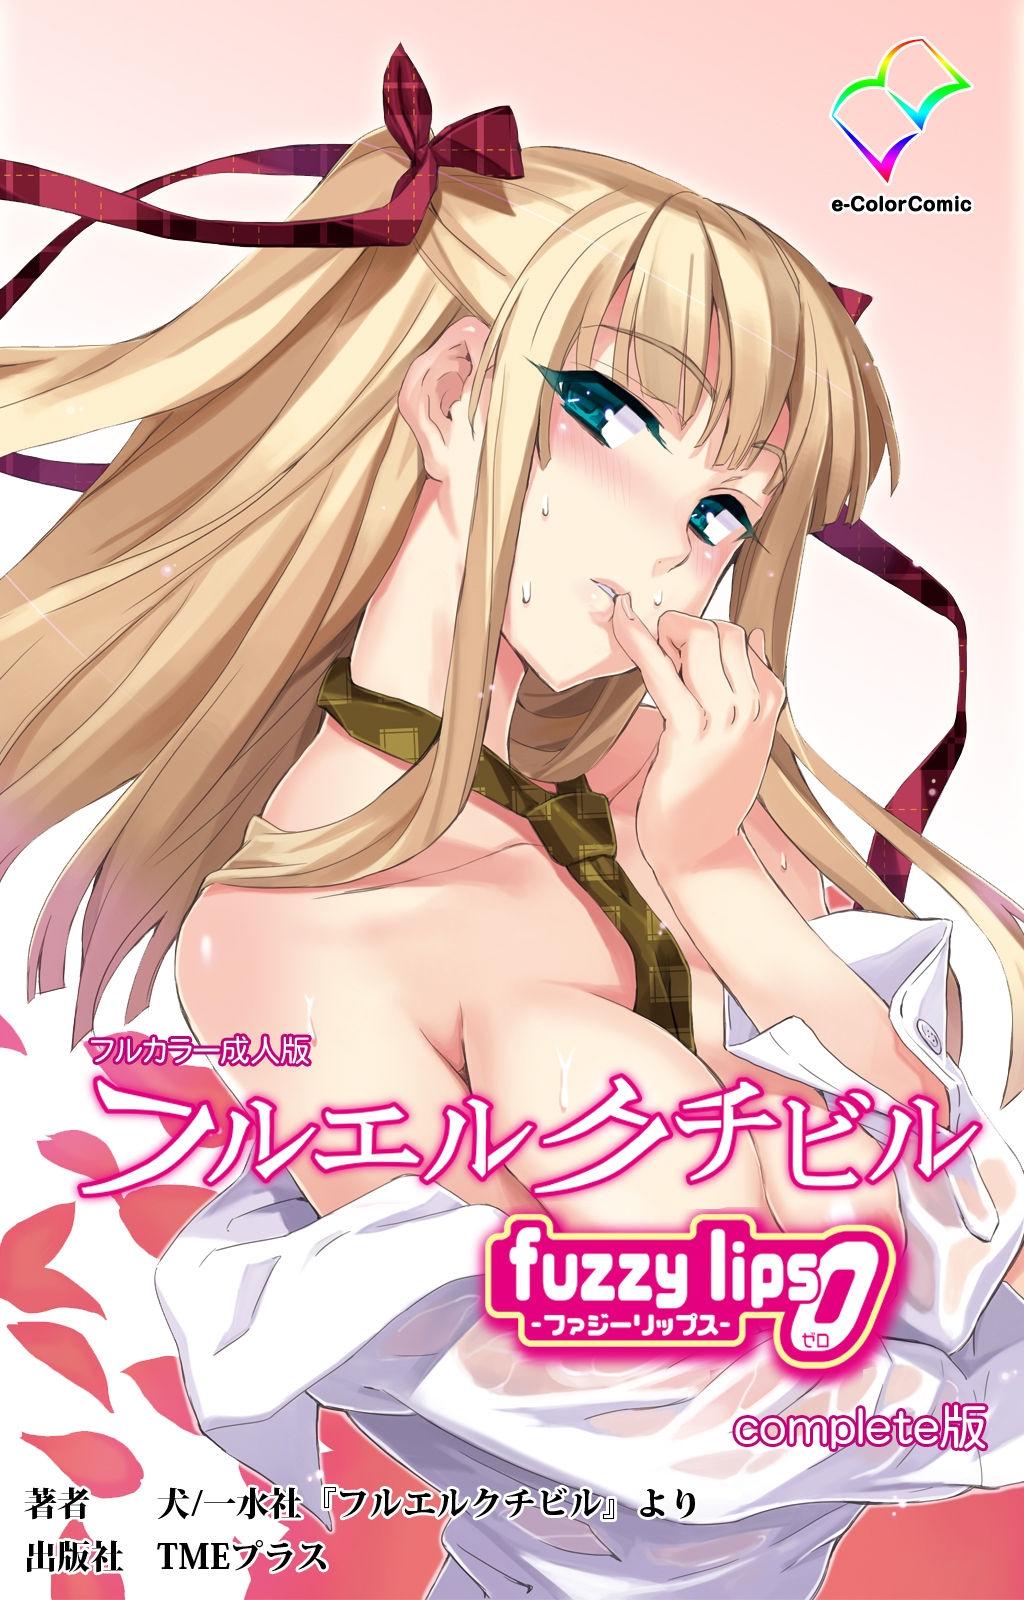 Furueru Kuchibiru fuzzy lips0 Complete Ban 0